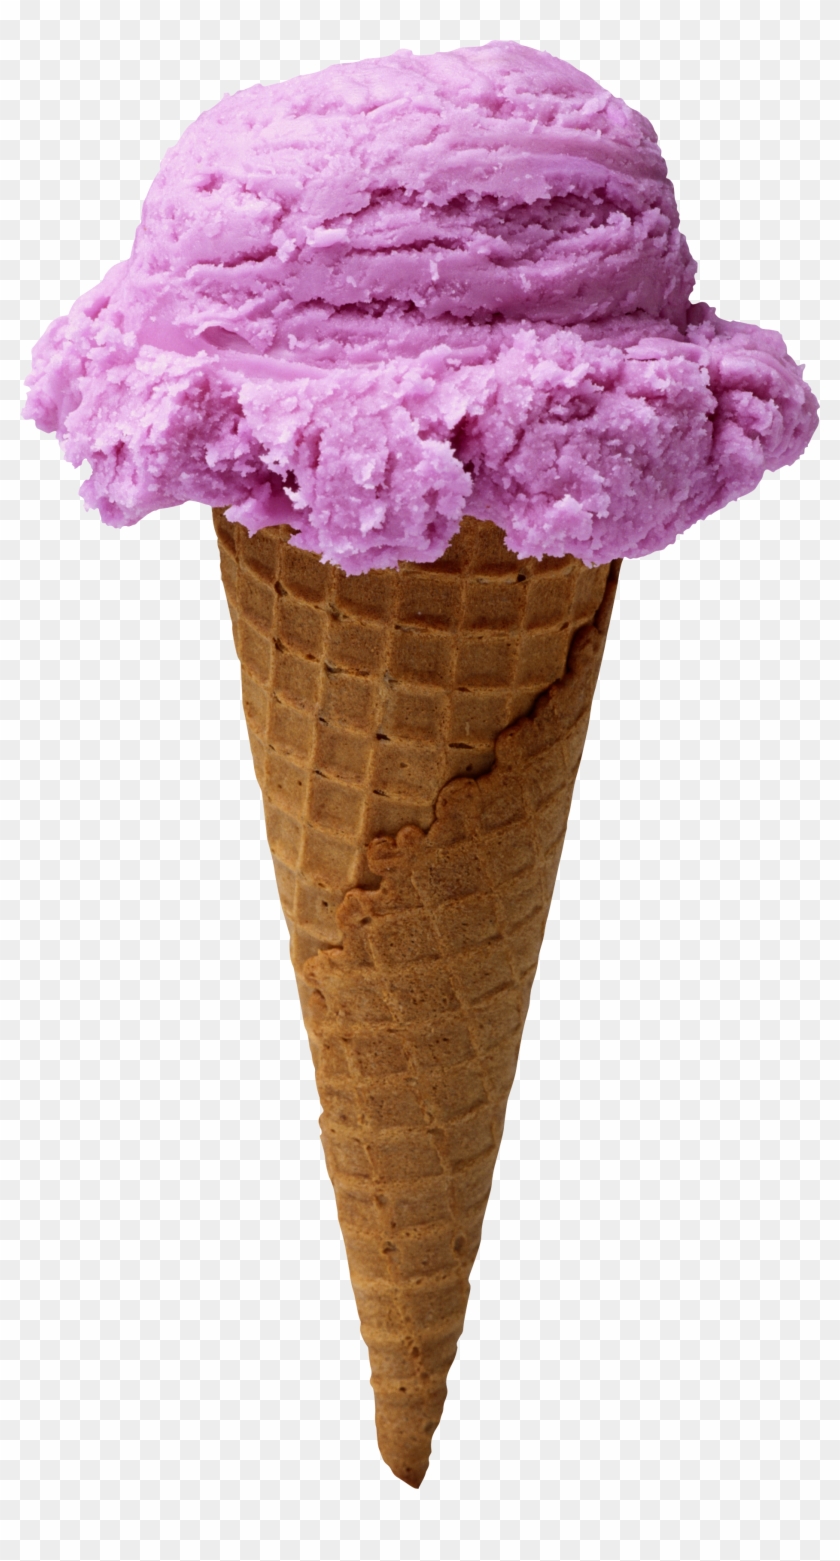 Ice Cream Png Image - Ice Cream Cone Variety Clipart #458849